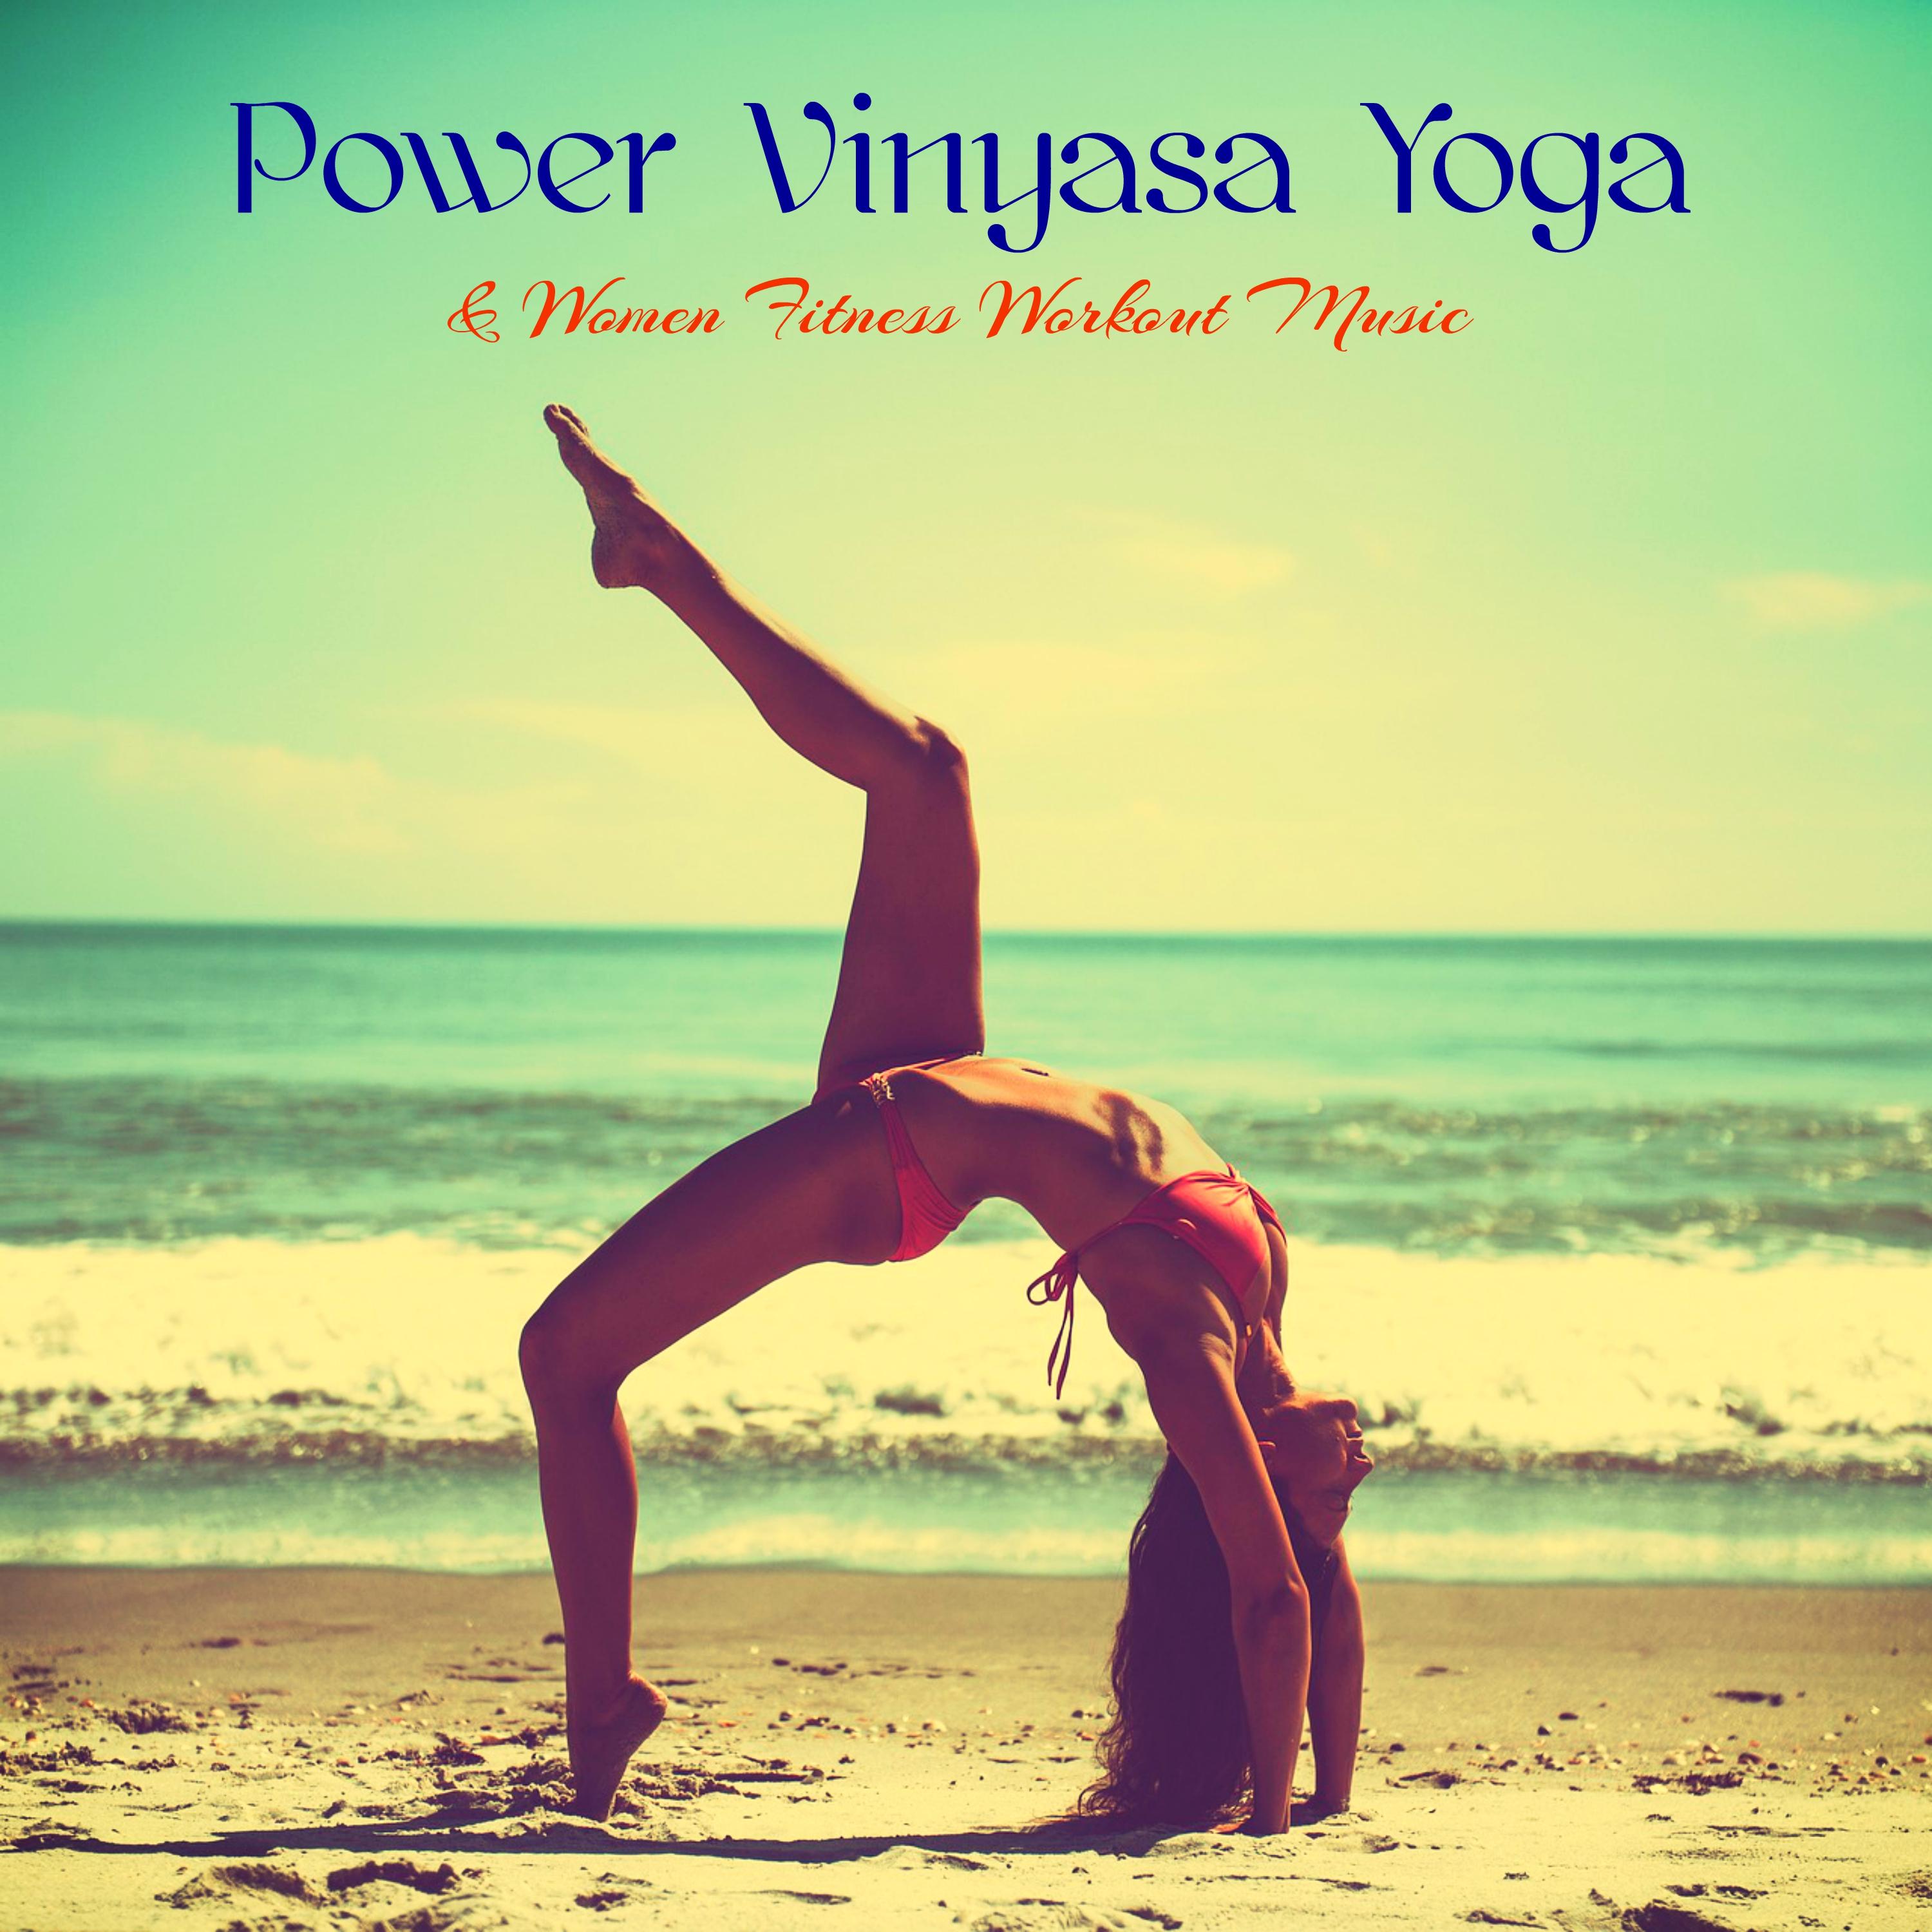 Power Vinyasa Yoga  Women Fitness Workout Music  Lounge  Ambient Chill Out 4 Power Yoga, Vinyasa, Pilates  Cardio Personal Training